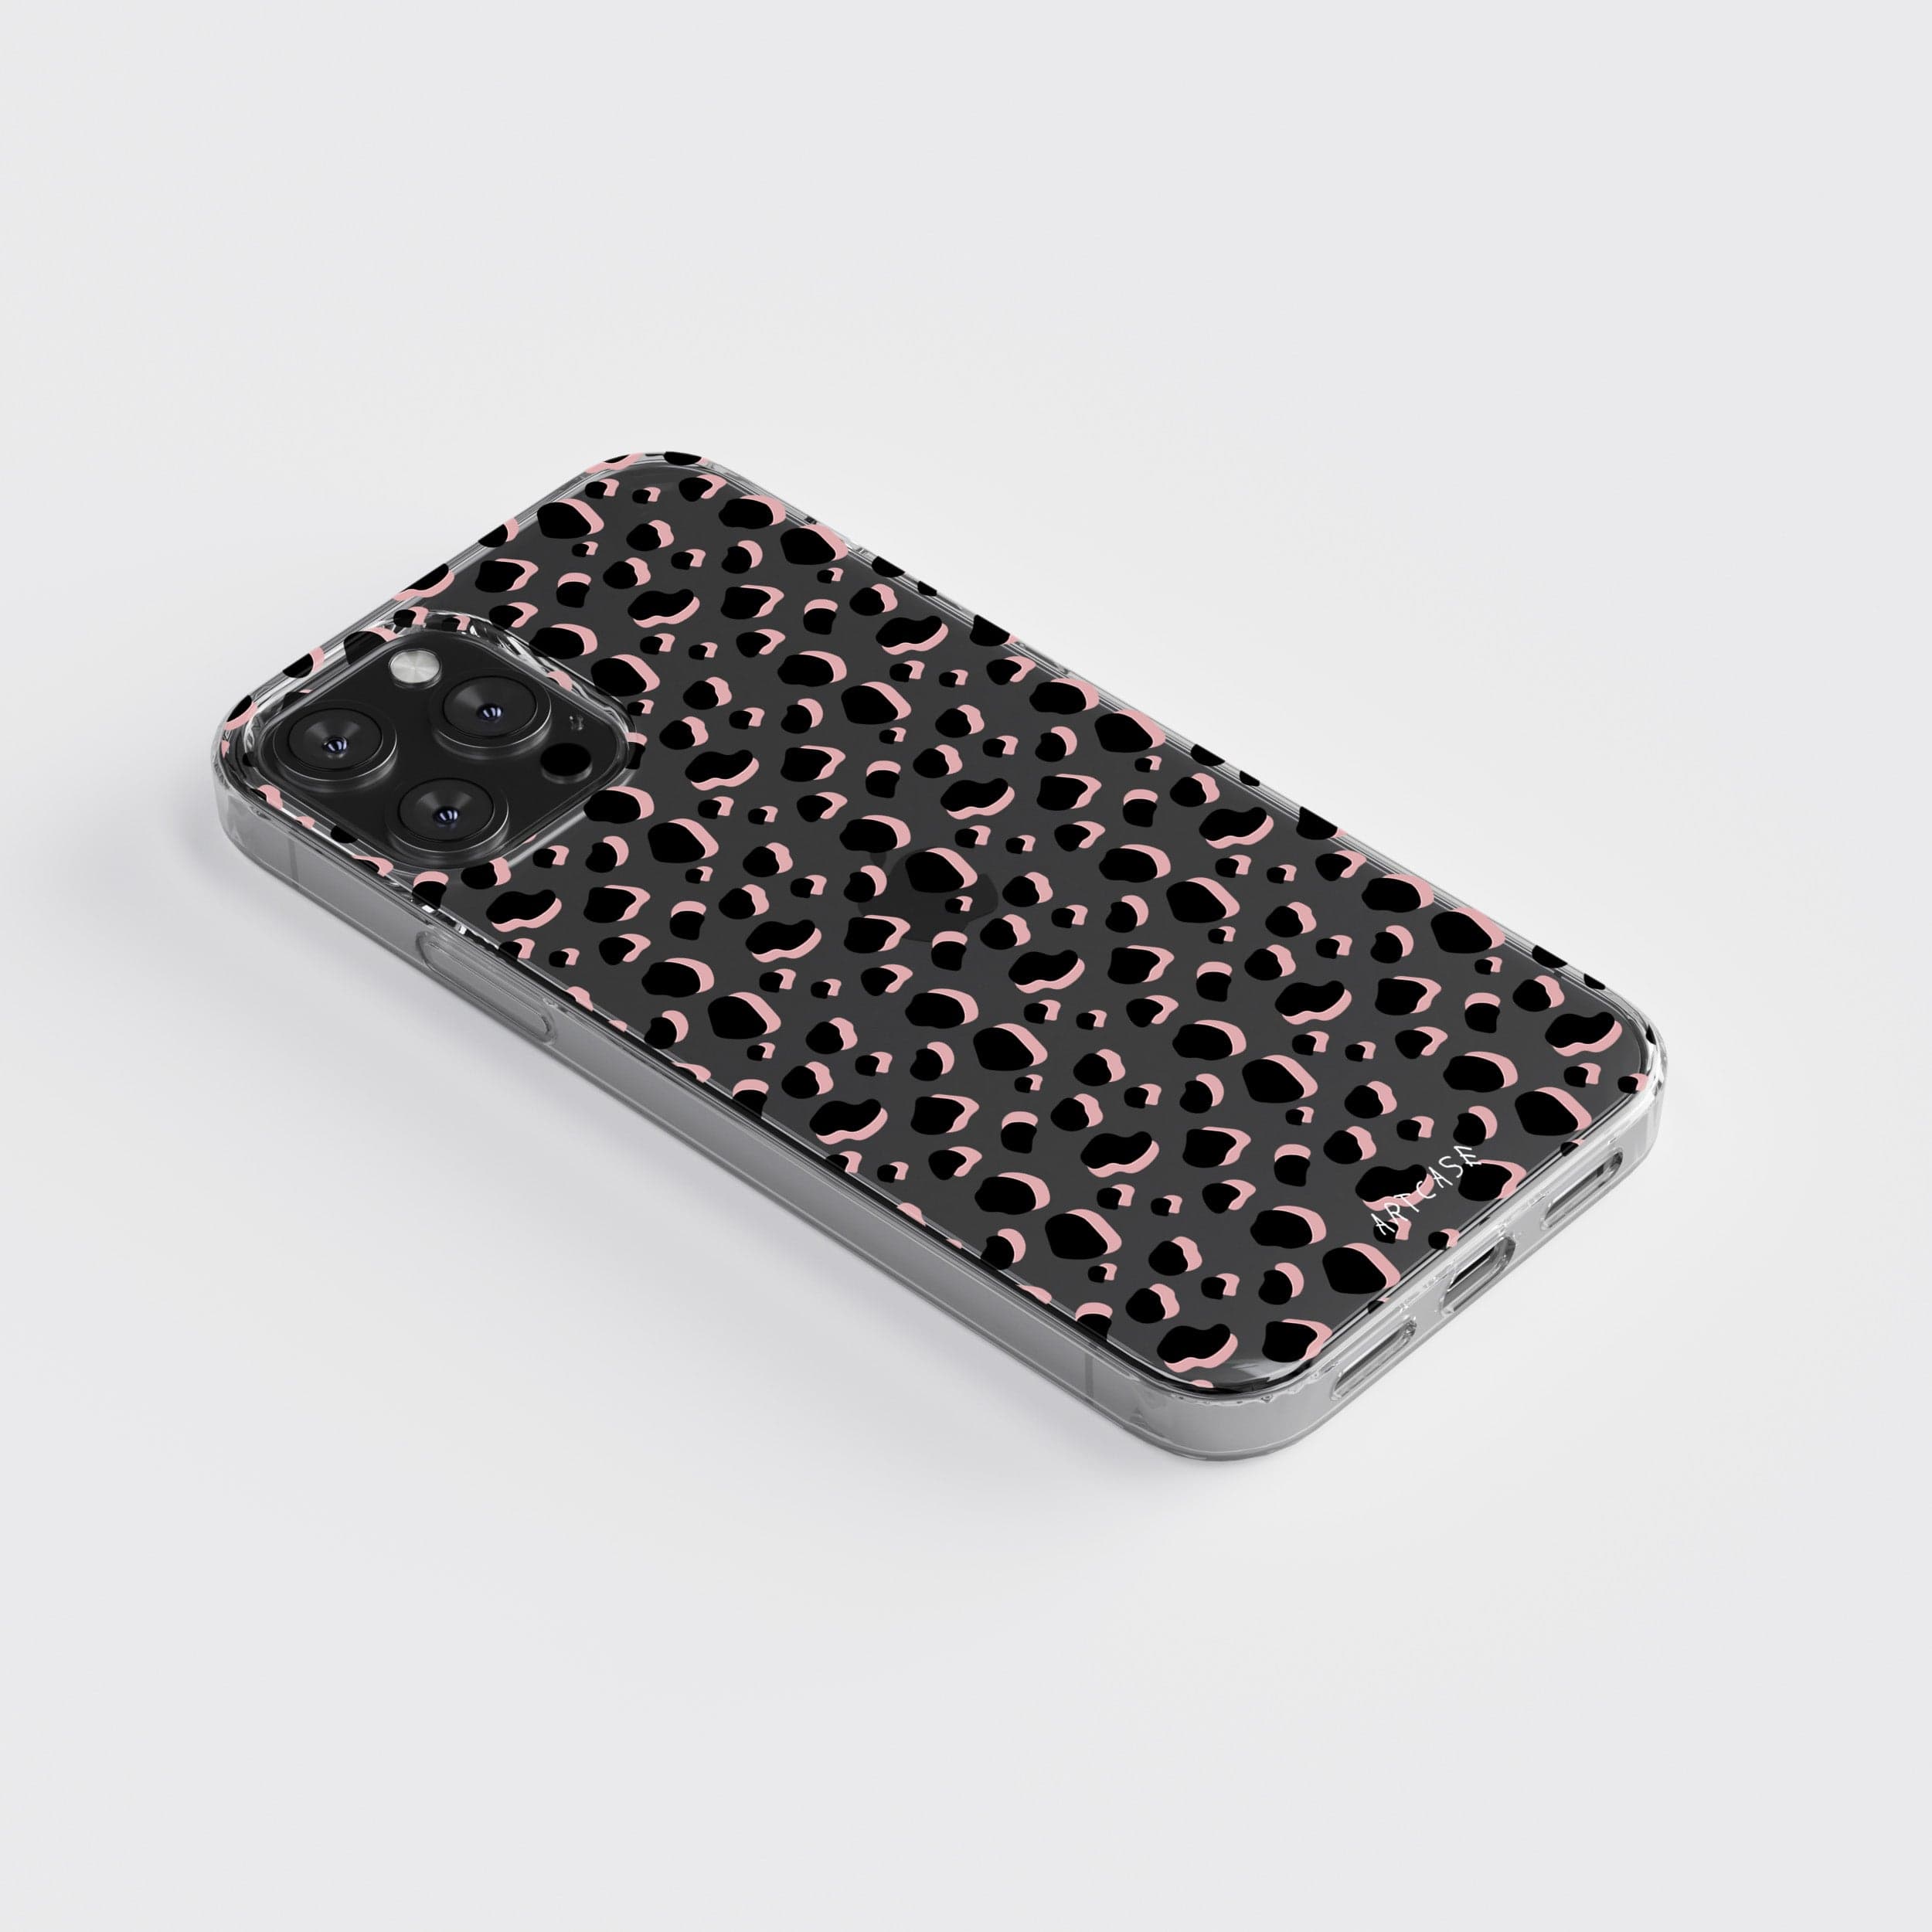 Transparent silicone case "Pink spots"